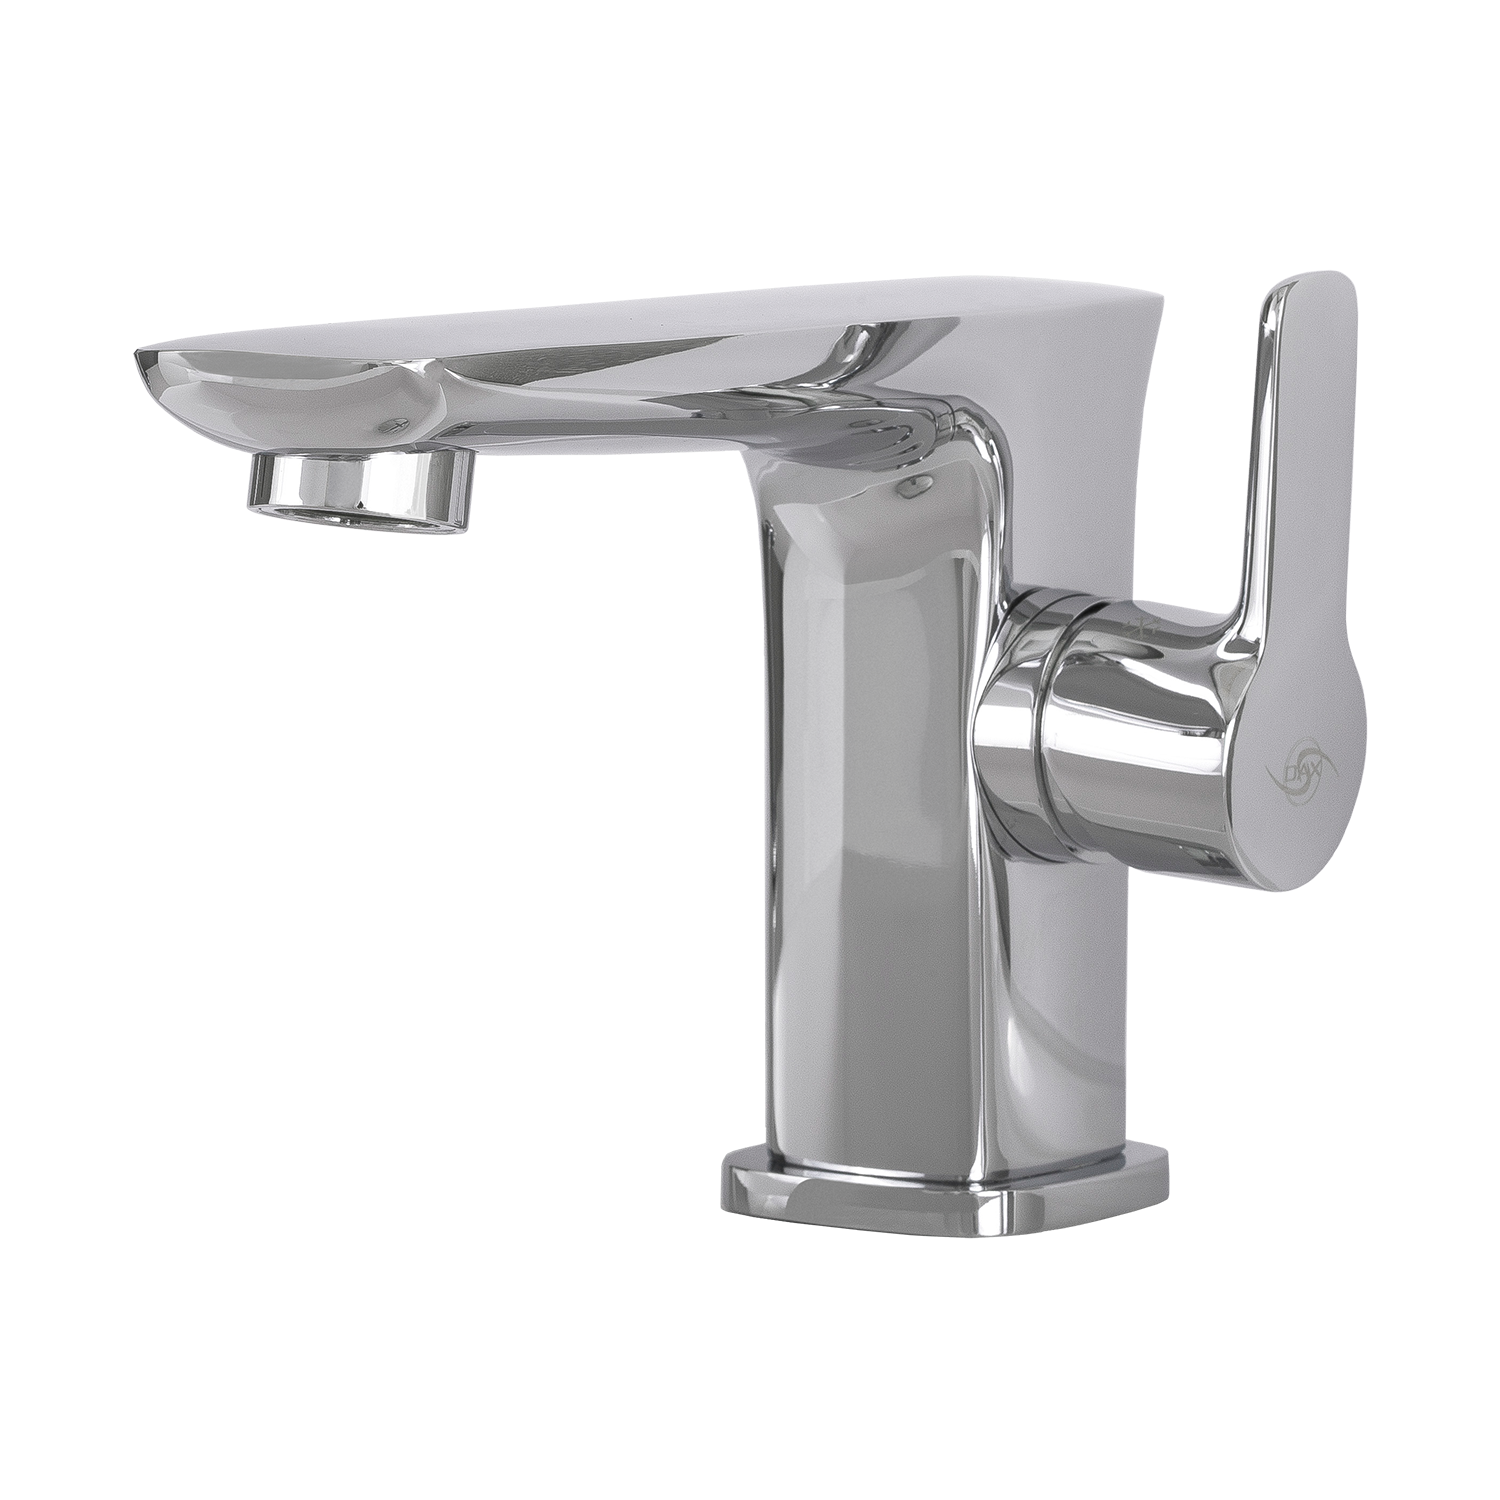 DAX Single Handle Bathroom Faucet, Brass Body, Chrome Finish, 4-3/4 x 3-15/16 Inches (DAX-9883)